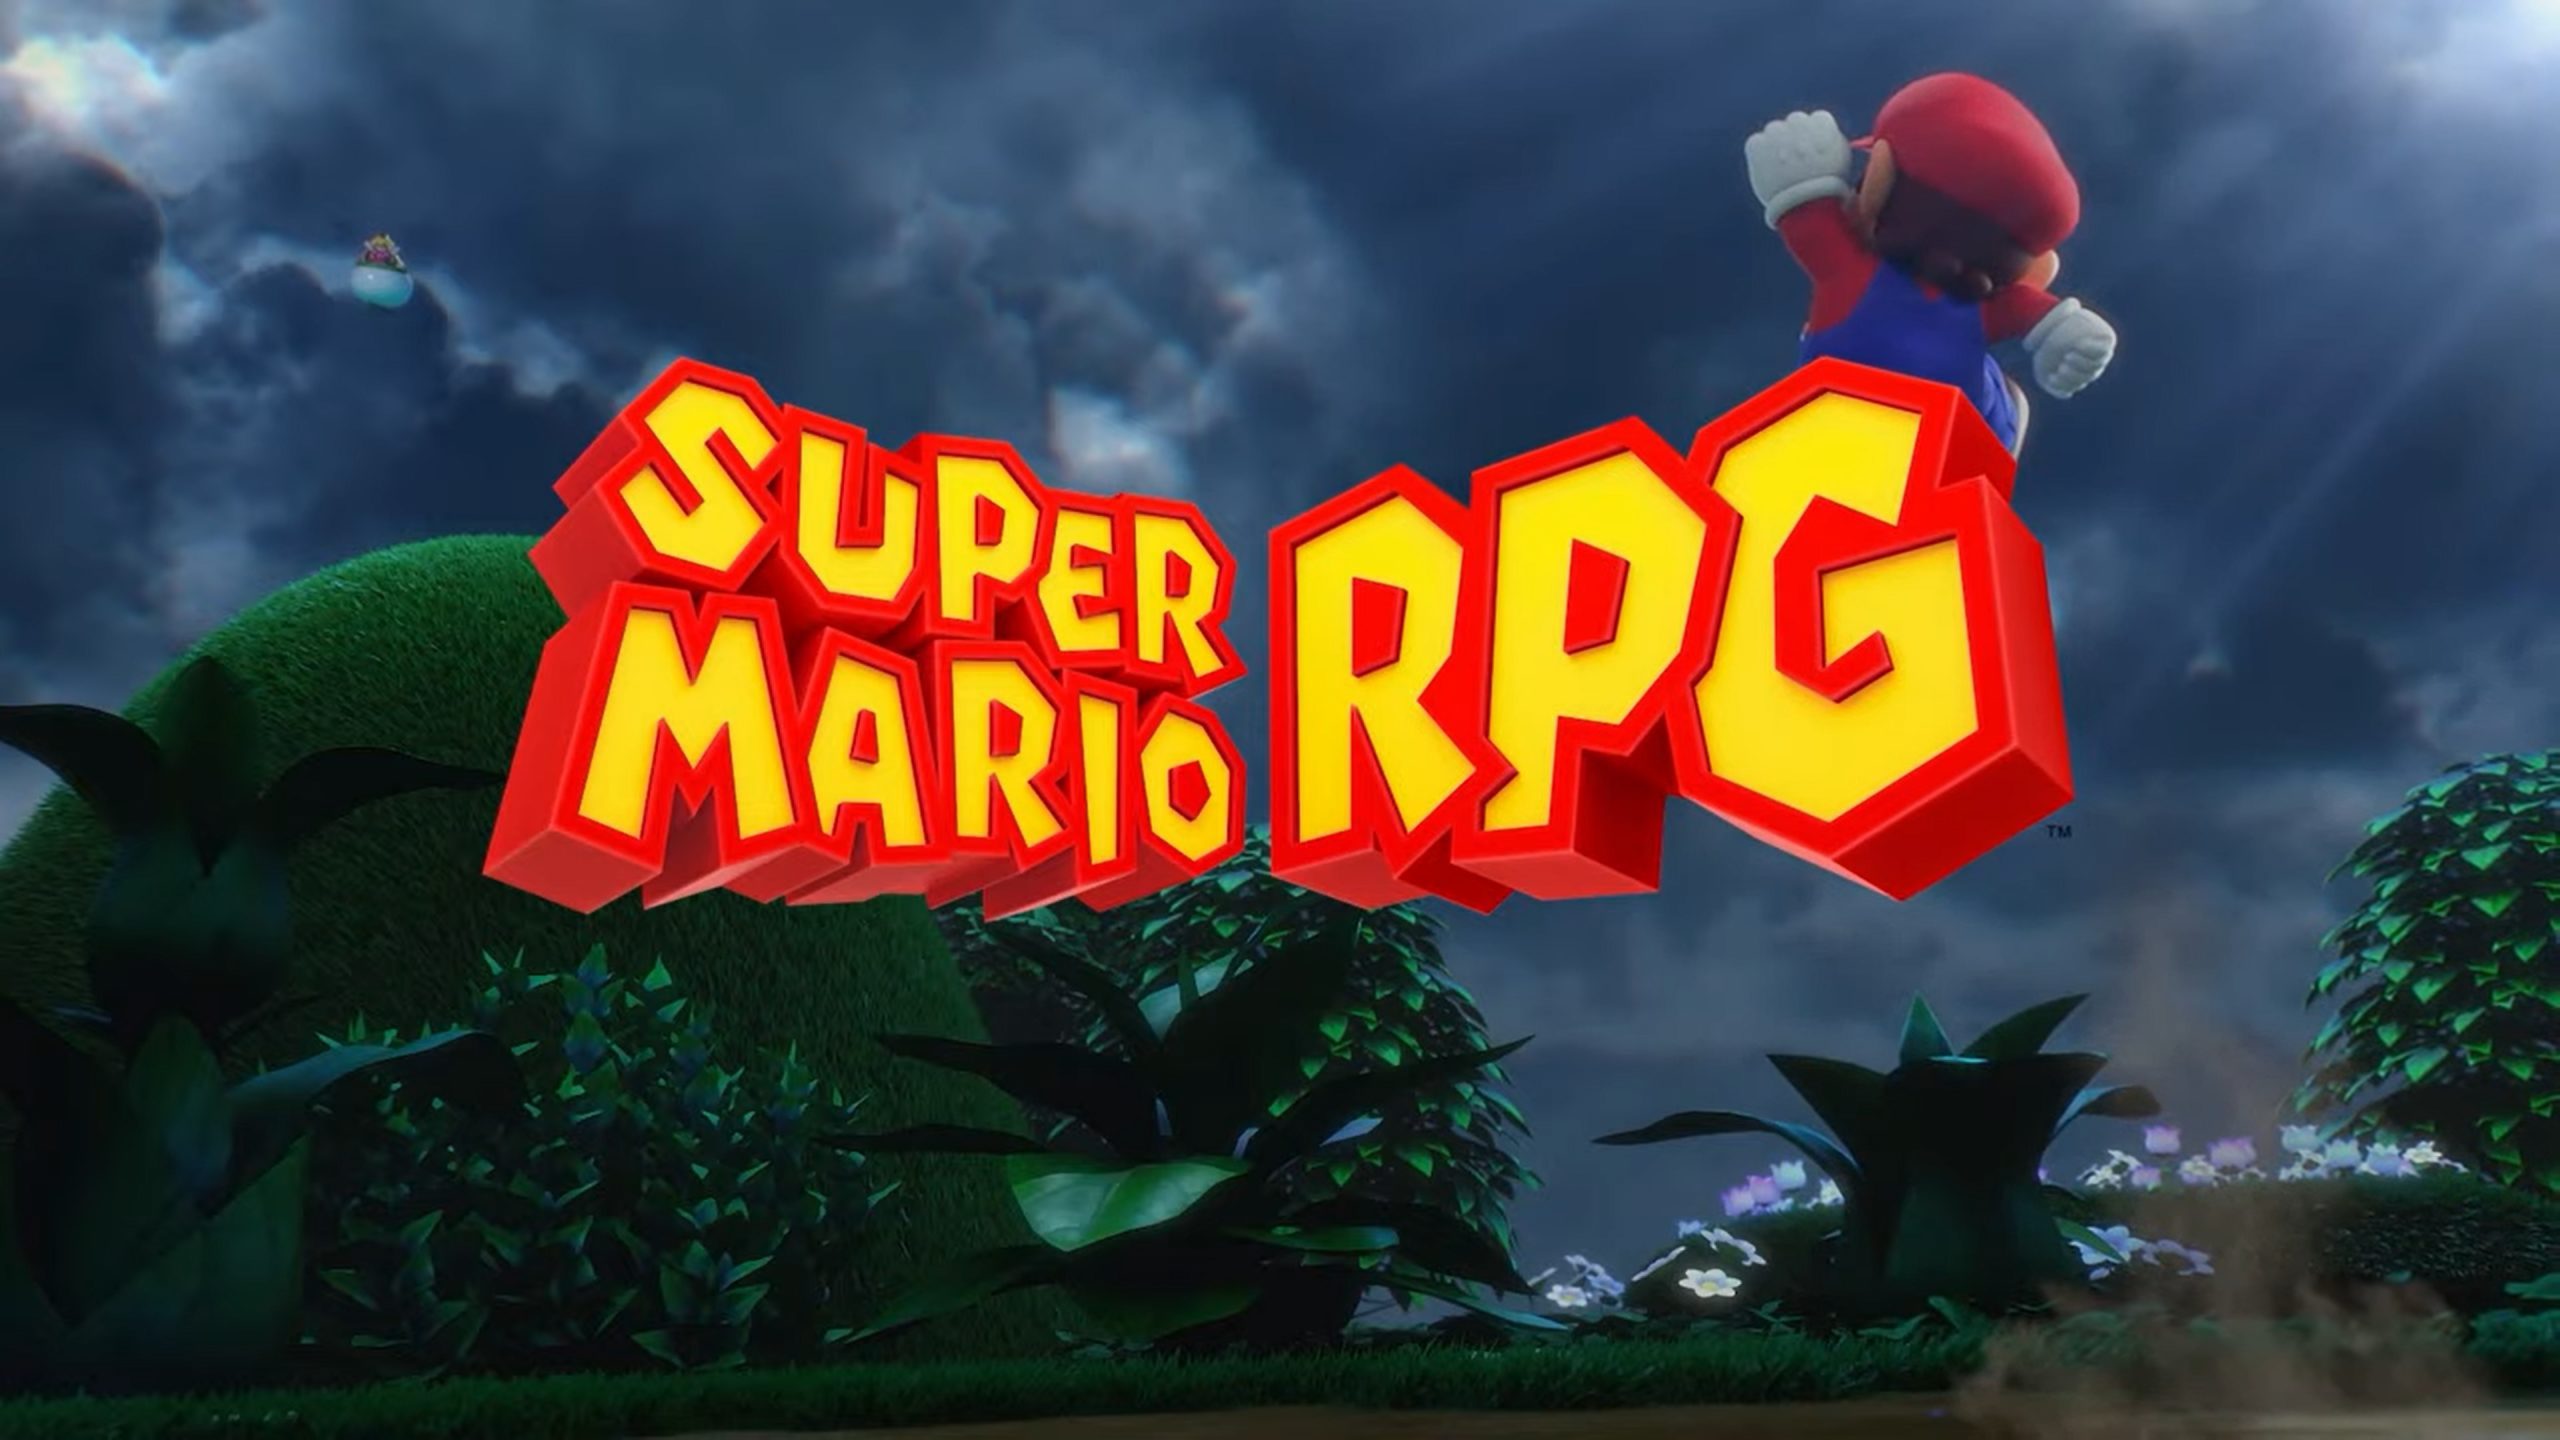 Super Mario RPG Remake Announced During Nintendo Direct mxdwn Games